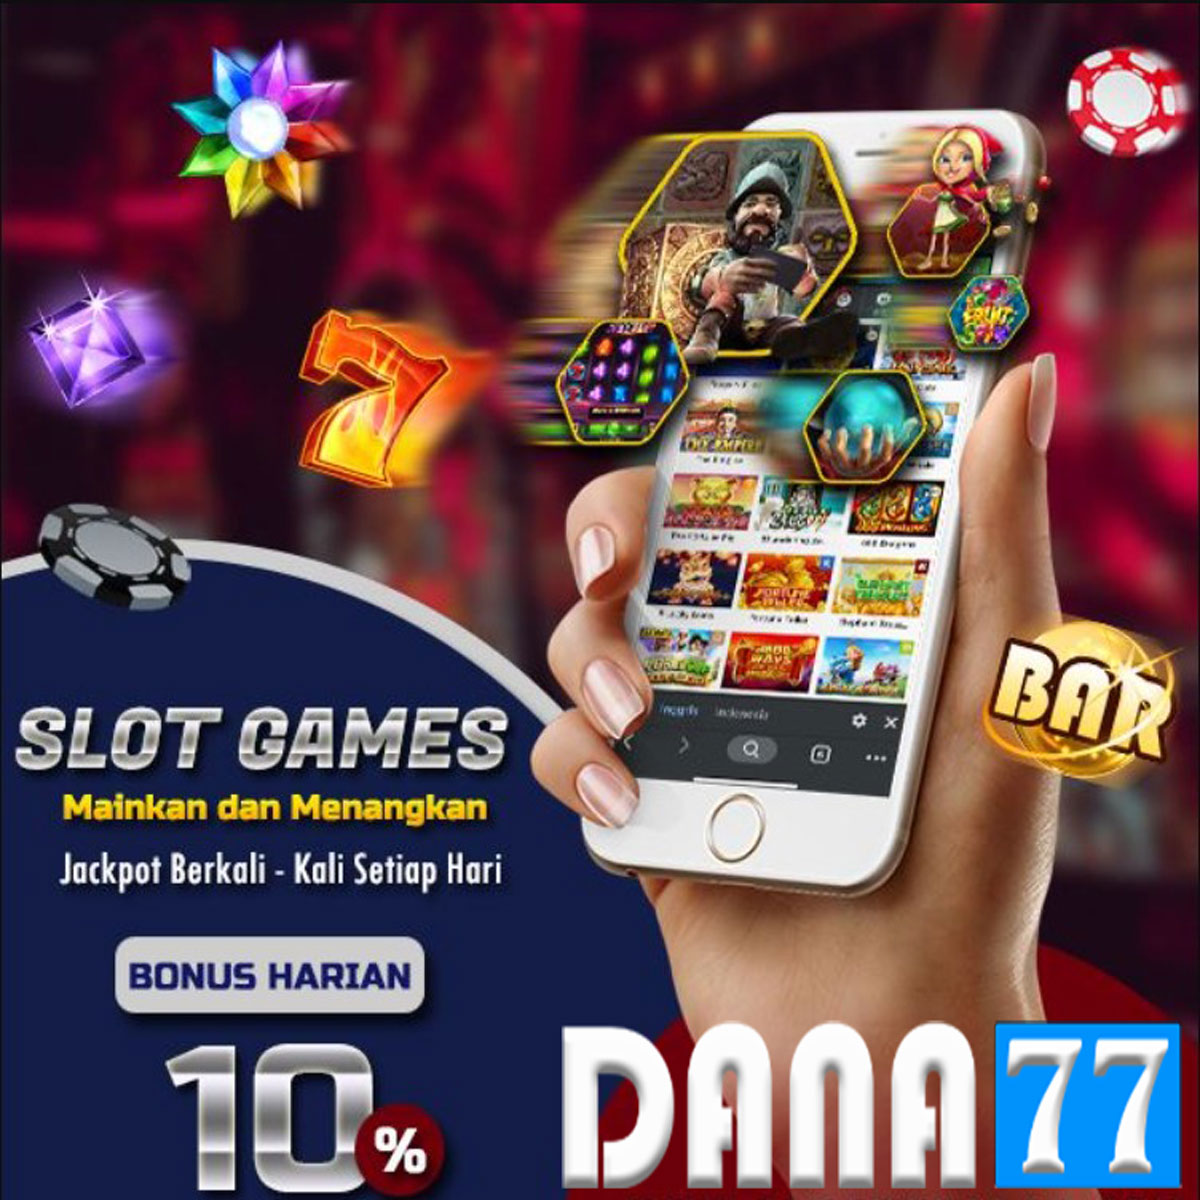 DANA77 Bonus Harian 10%